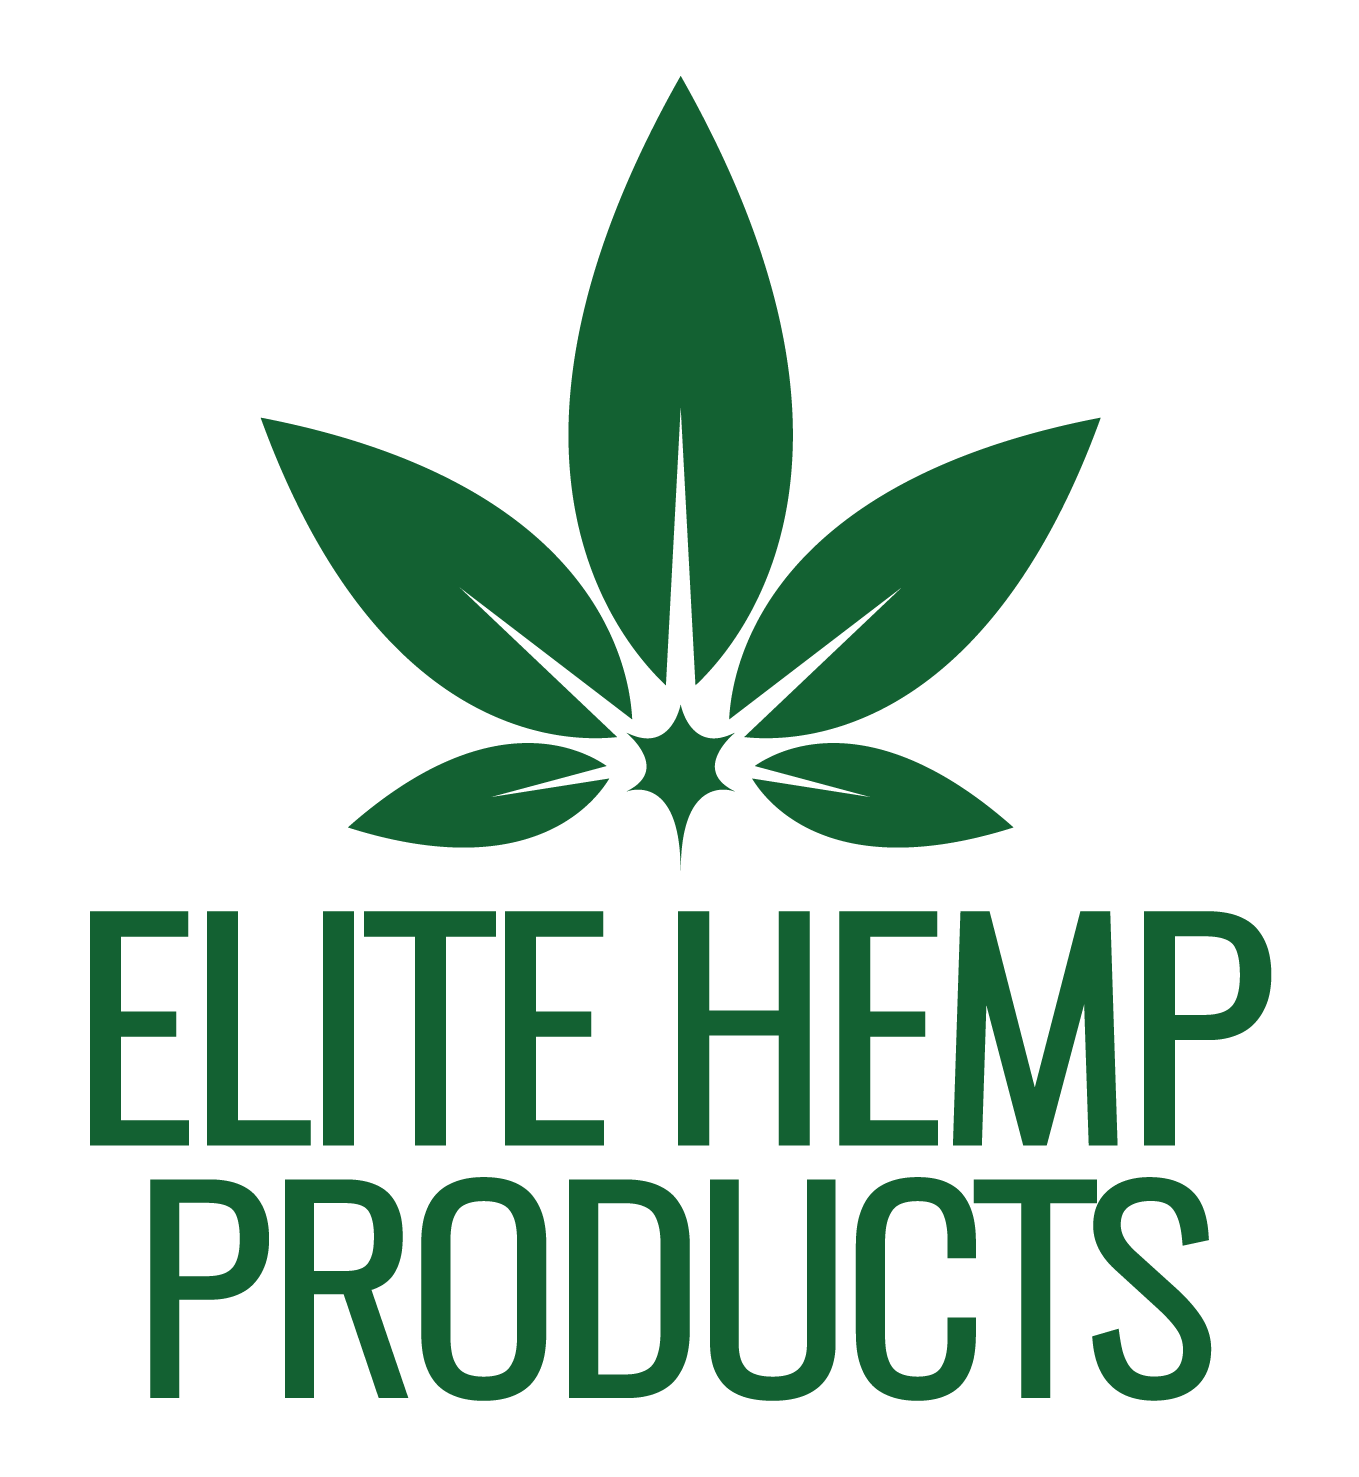 Elite Hemp Products